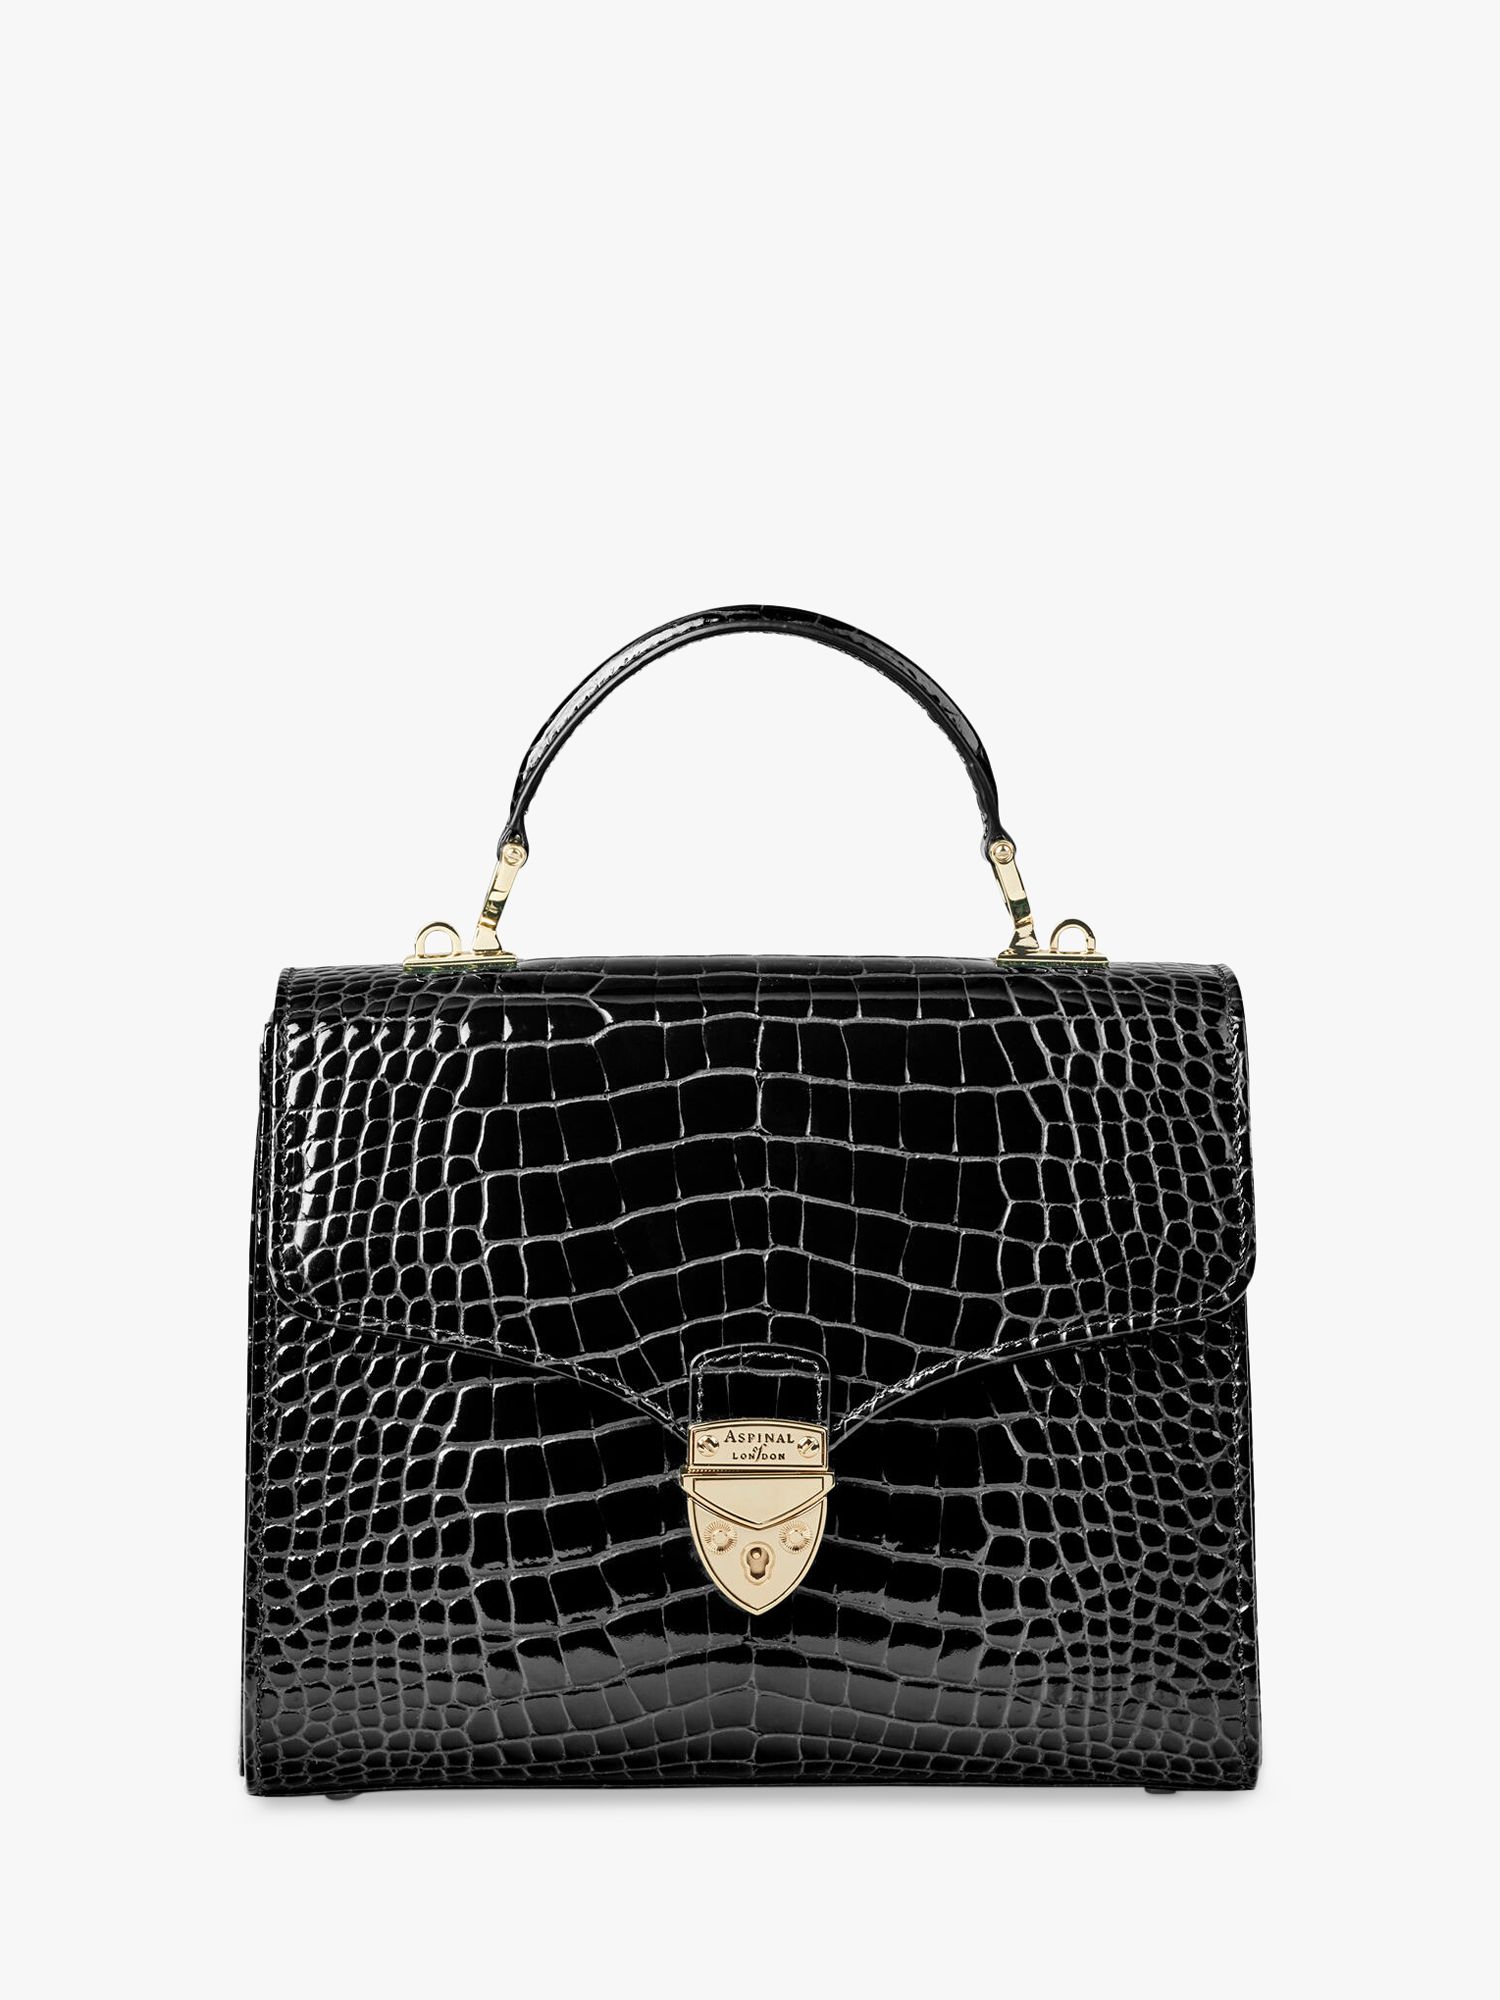 Aspinal of London Mayfair Croc Leather Cross Body Bag, Black